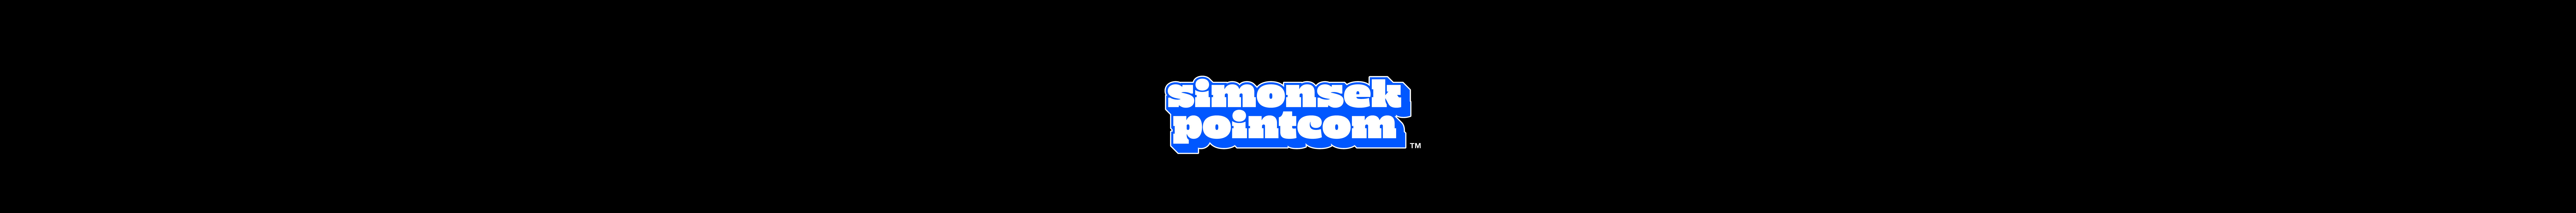 Simon Sek ™'s profile banner